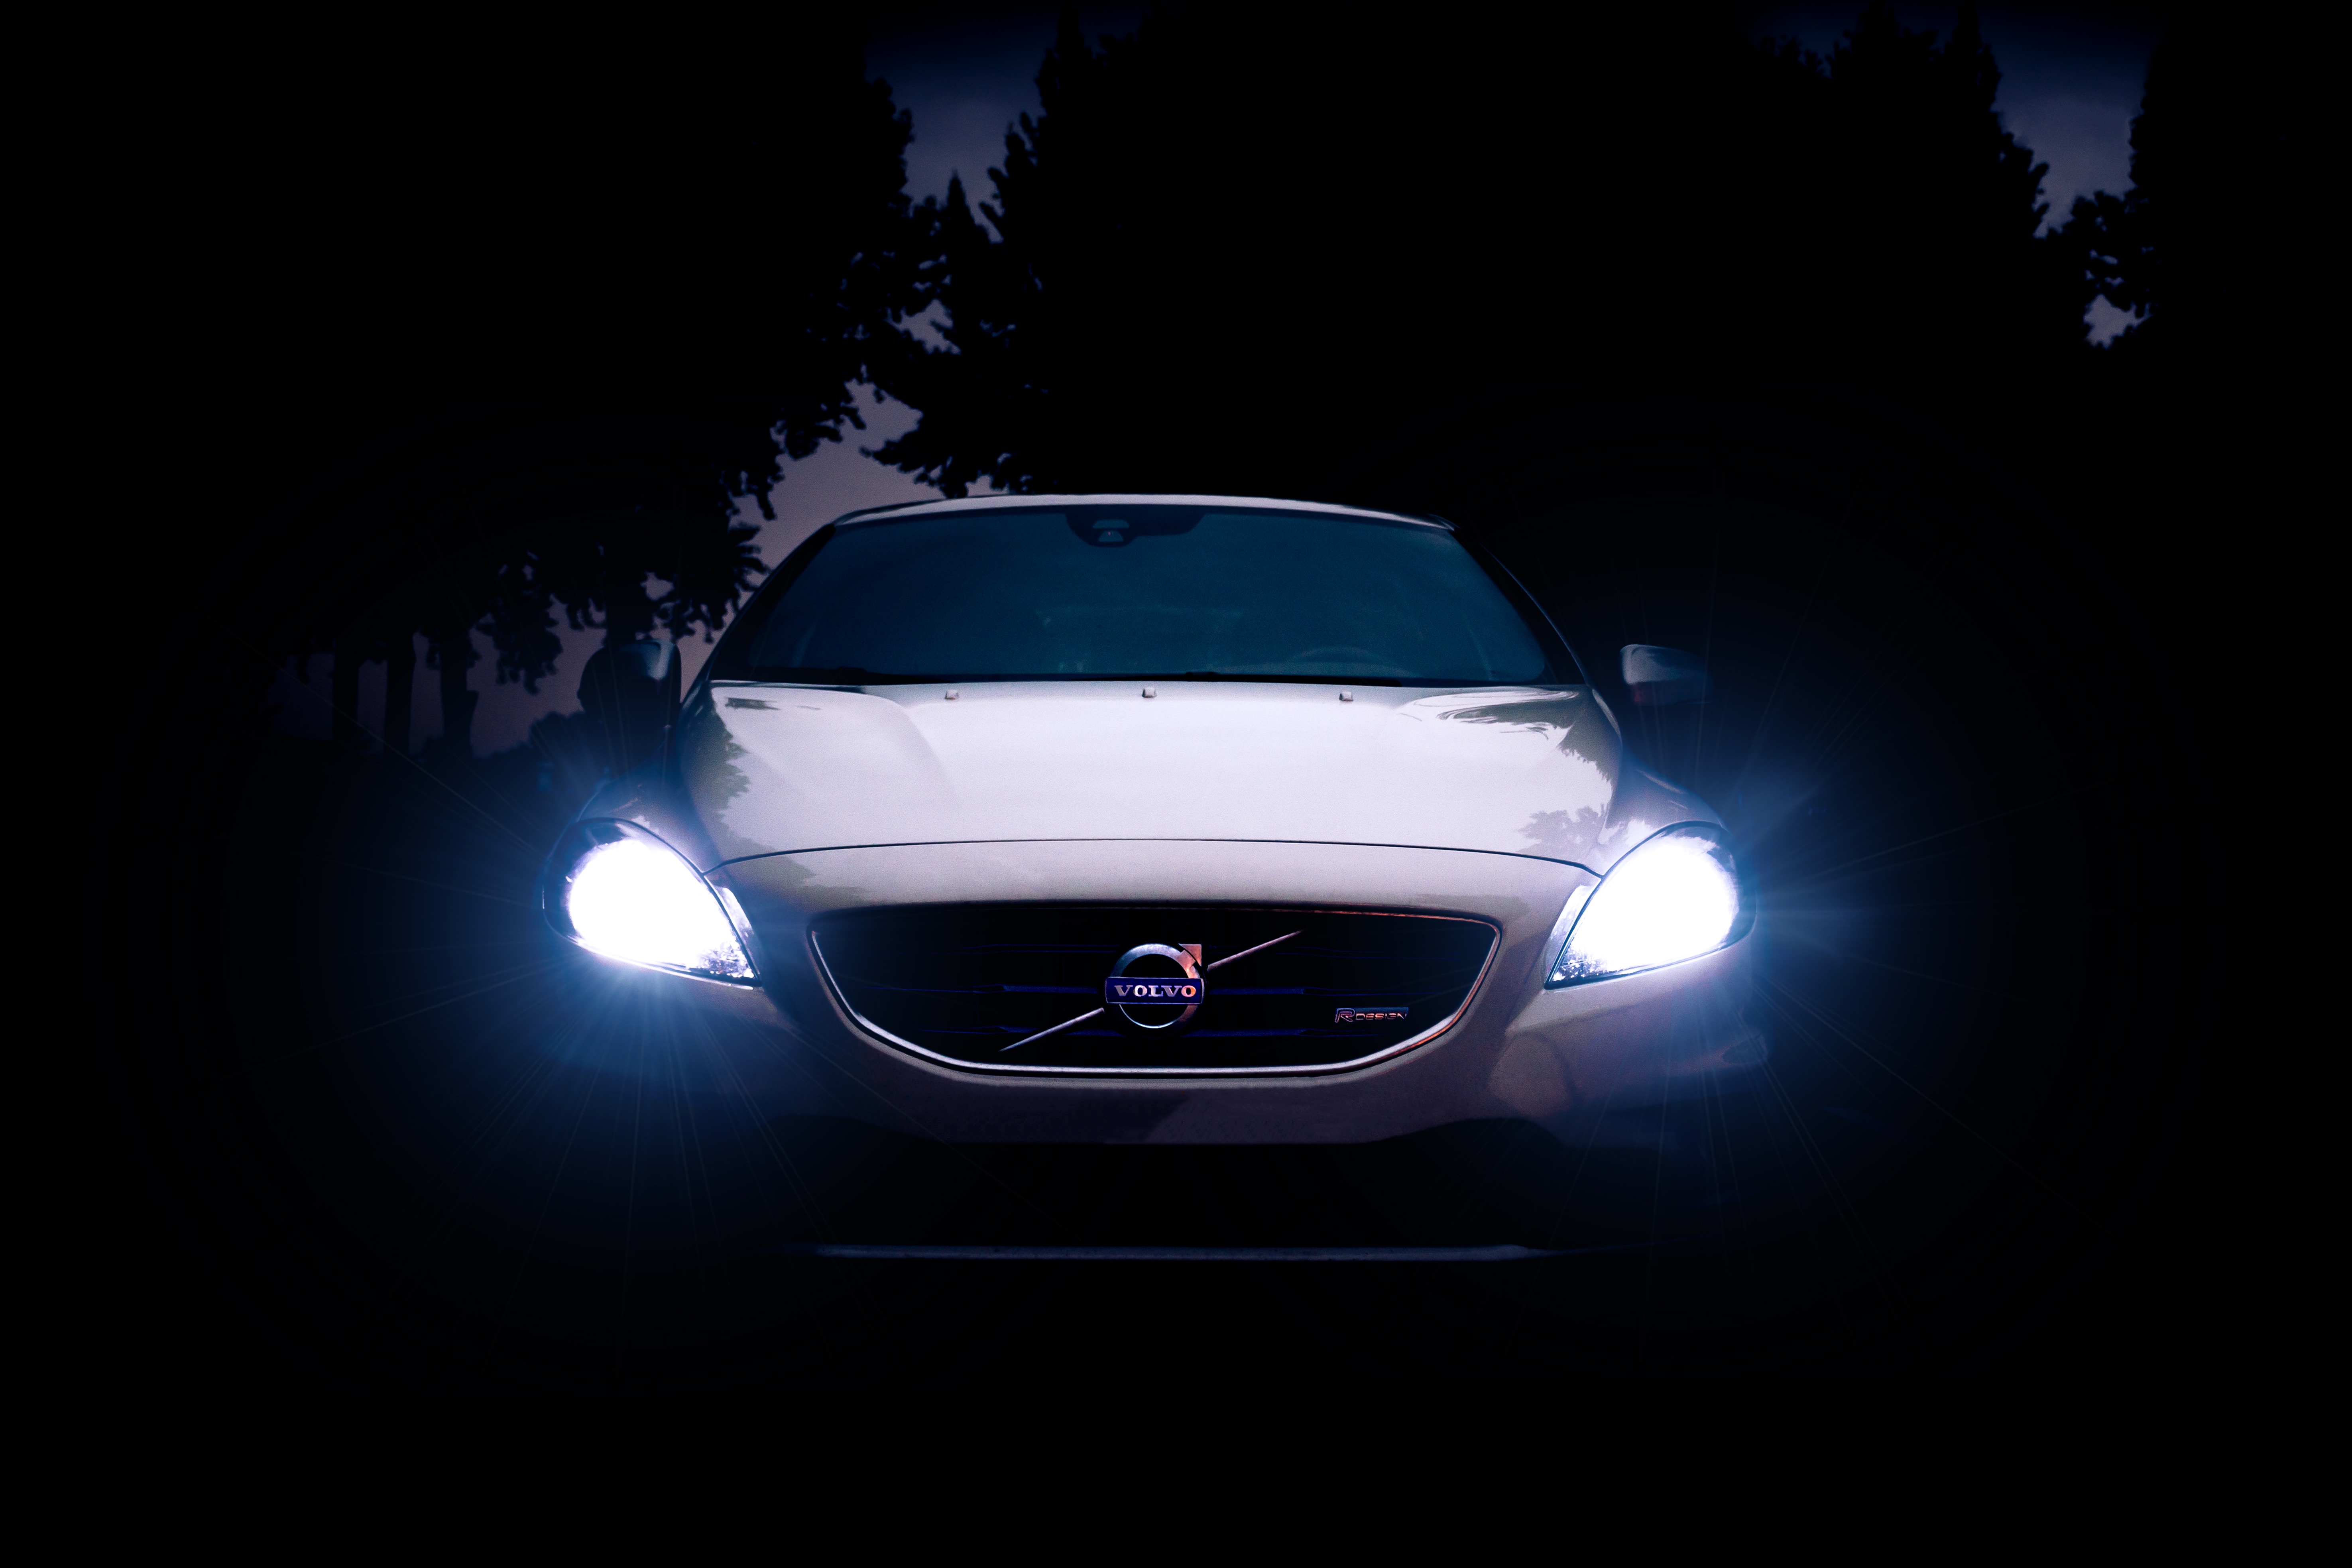 lights, volvo v40, volvo, night, cars, shine, light, front view, headlights lock screen backgrounds